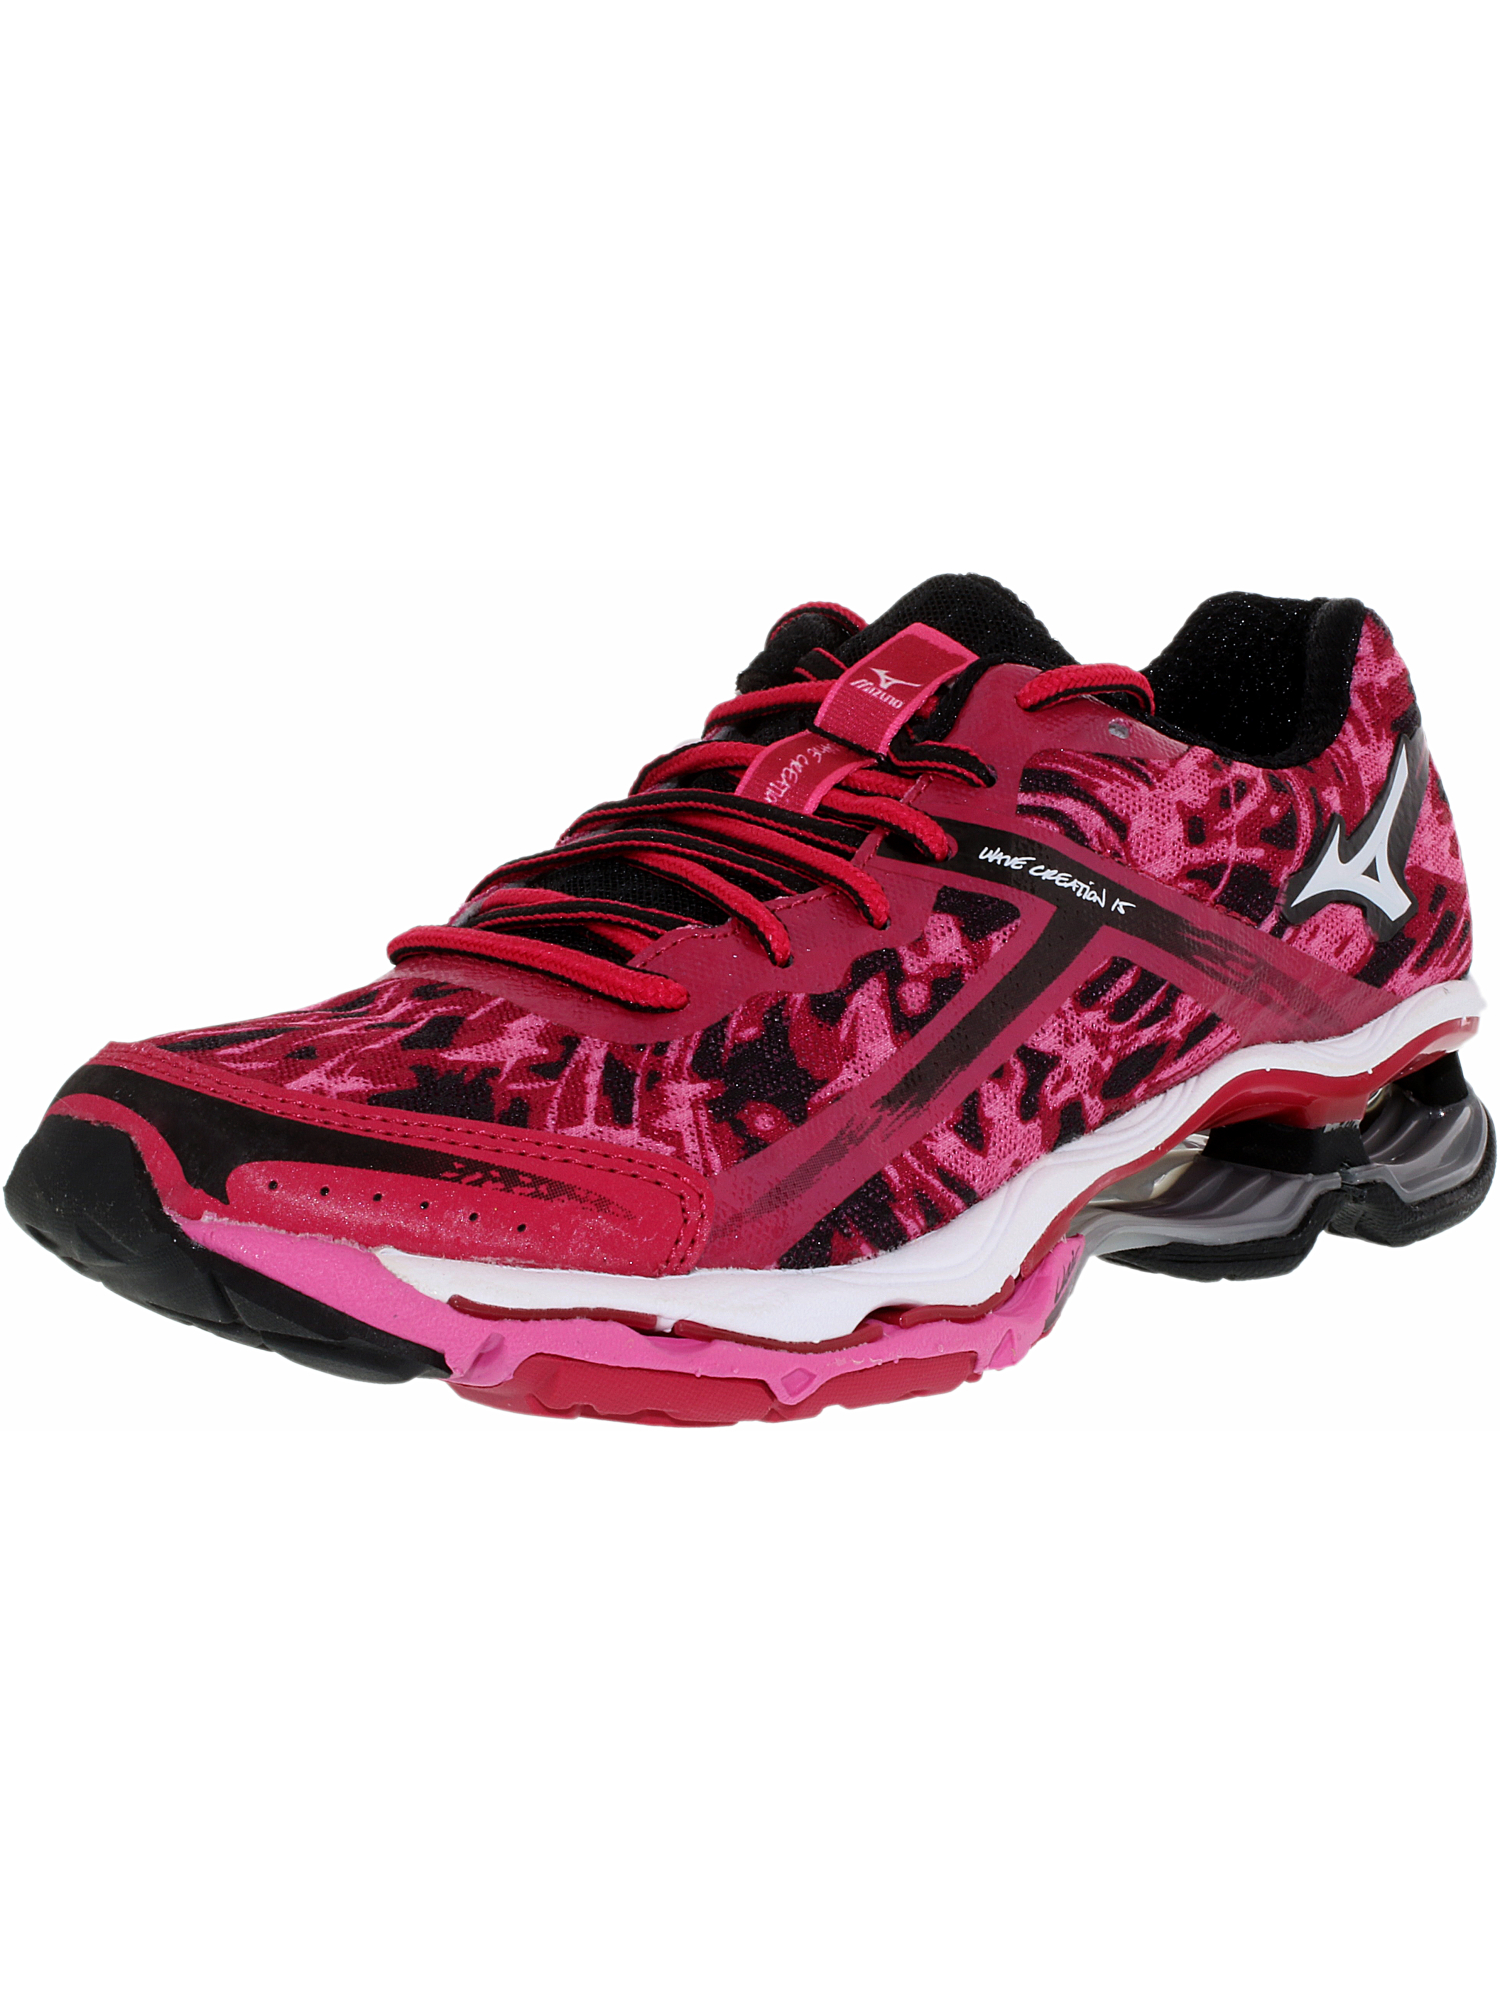 Mizuno Wave Creation 15 Running Women's Shoes Size 6 | eBay